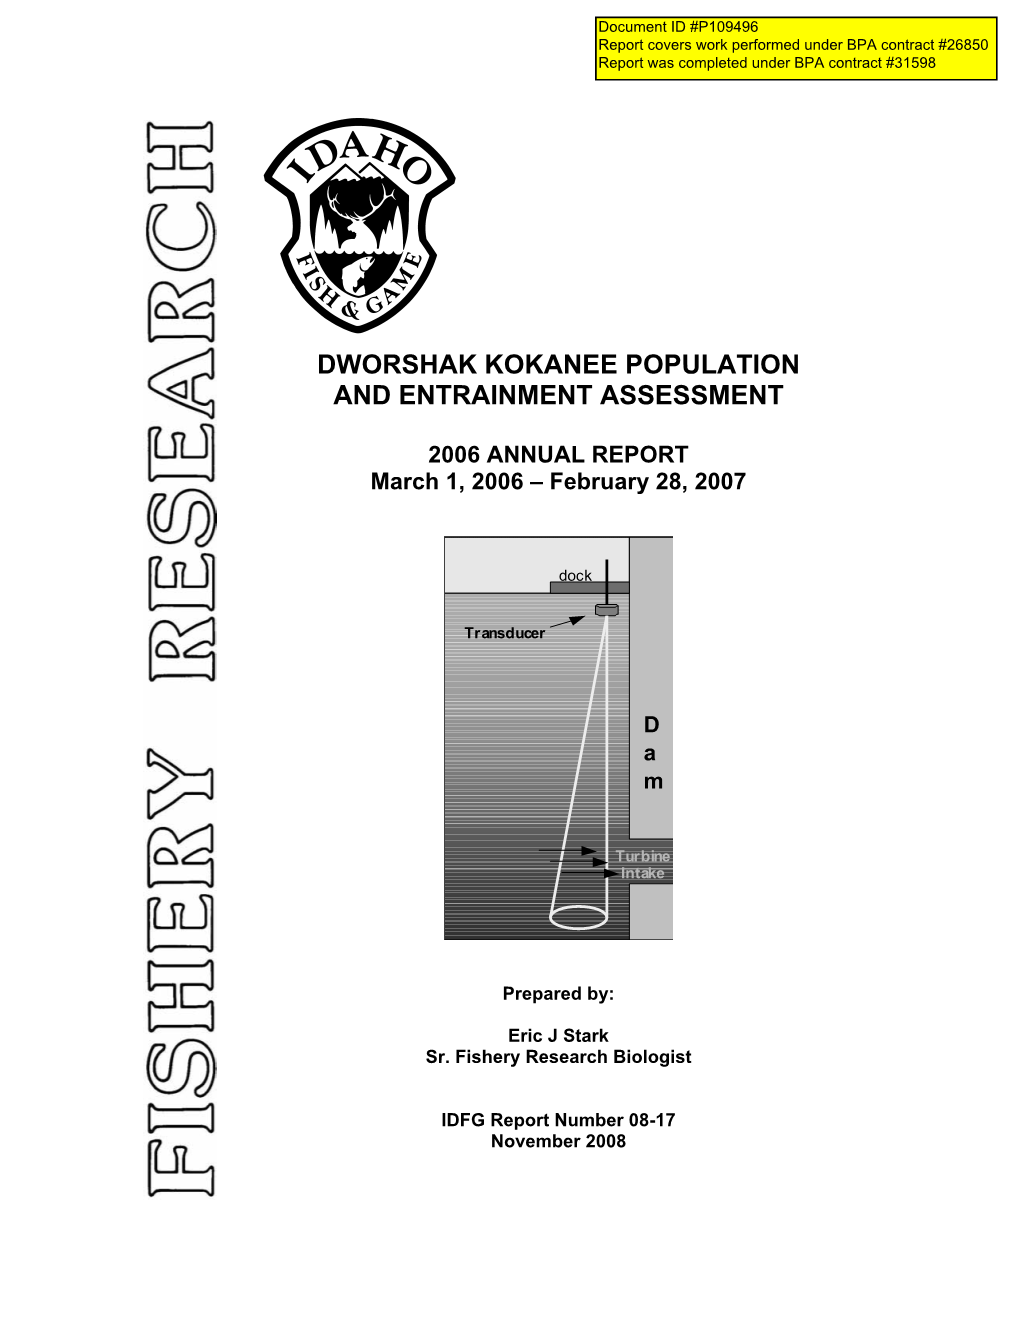 Dworshak Kokanee Population and Entrainment Assessment